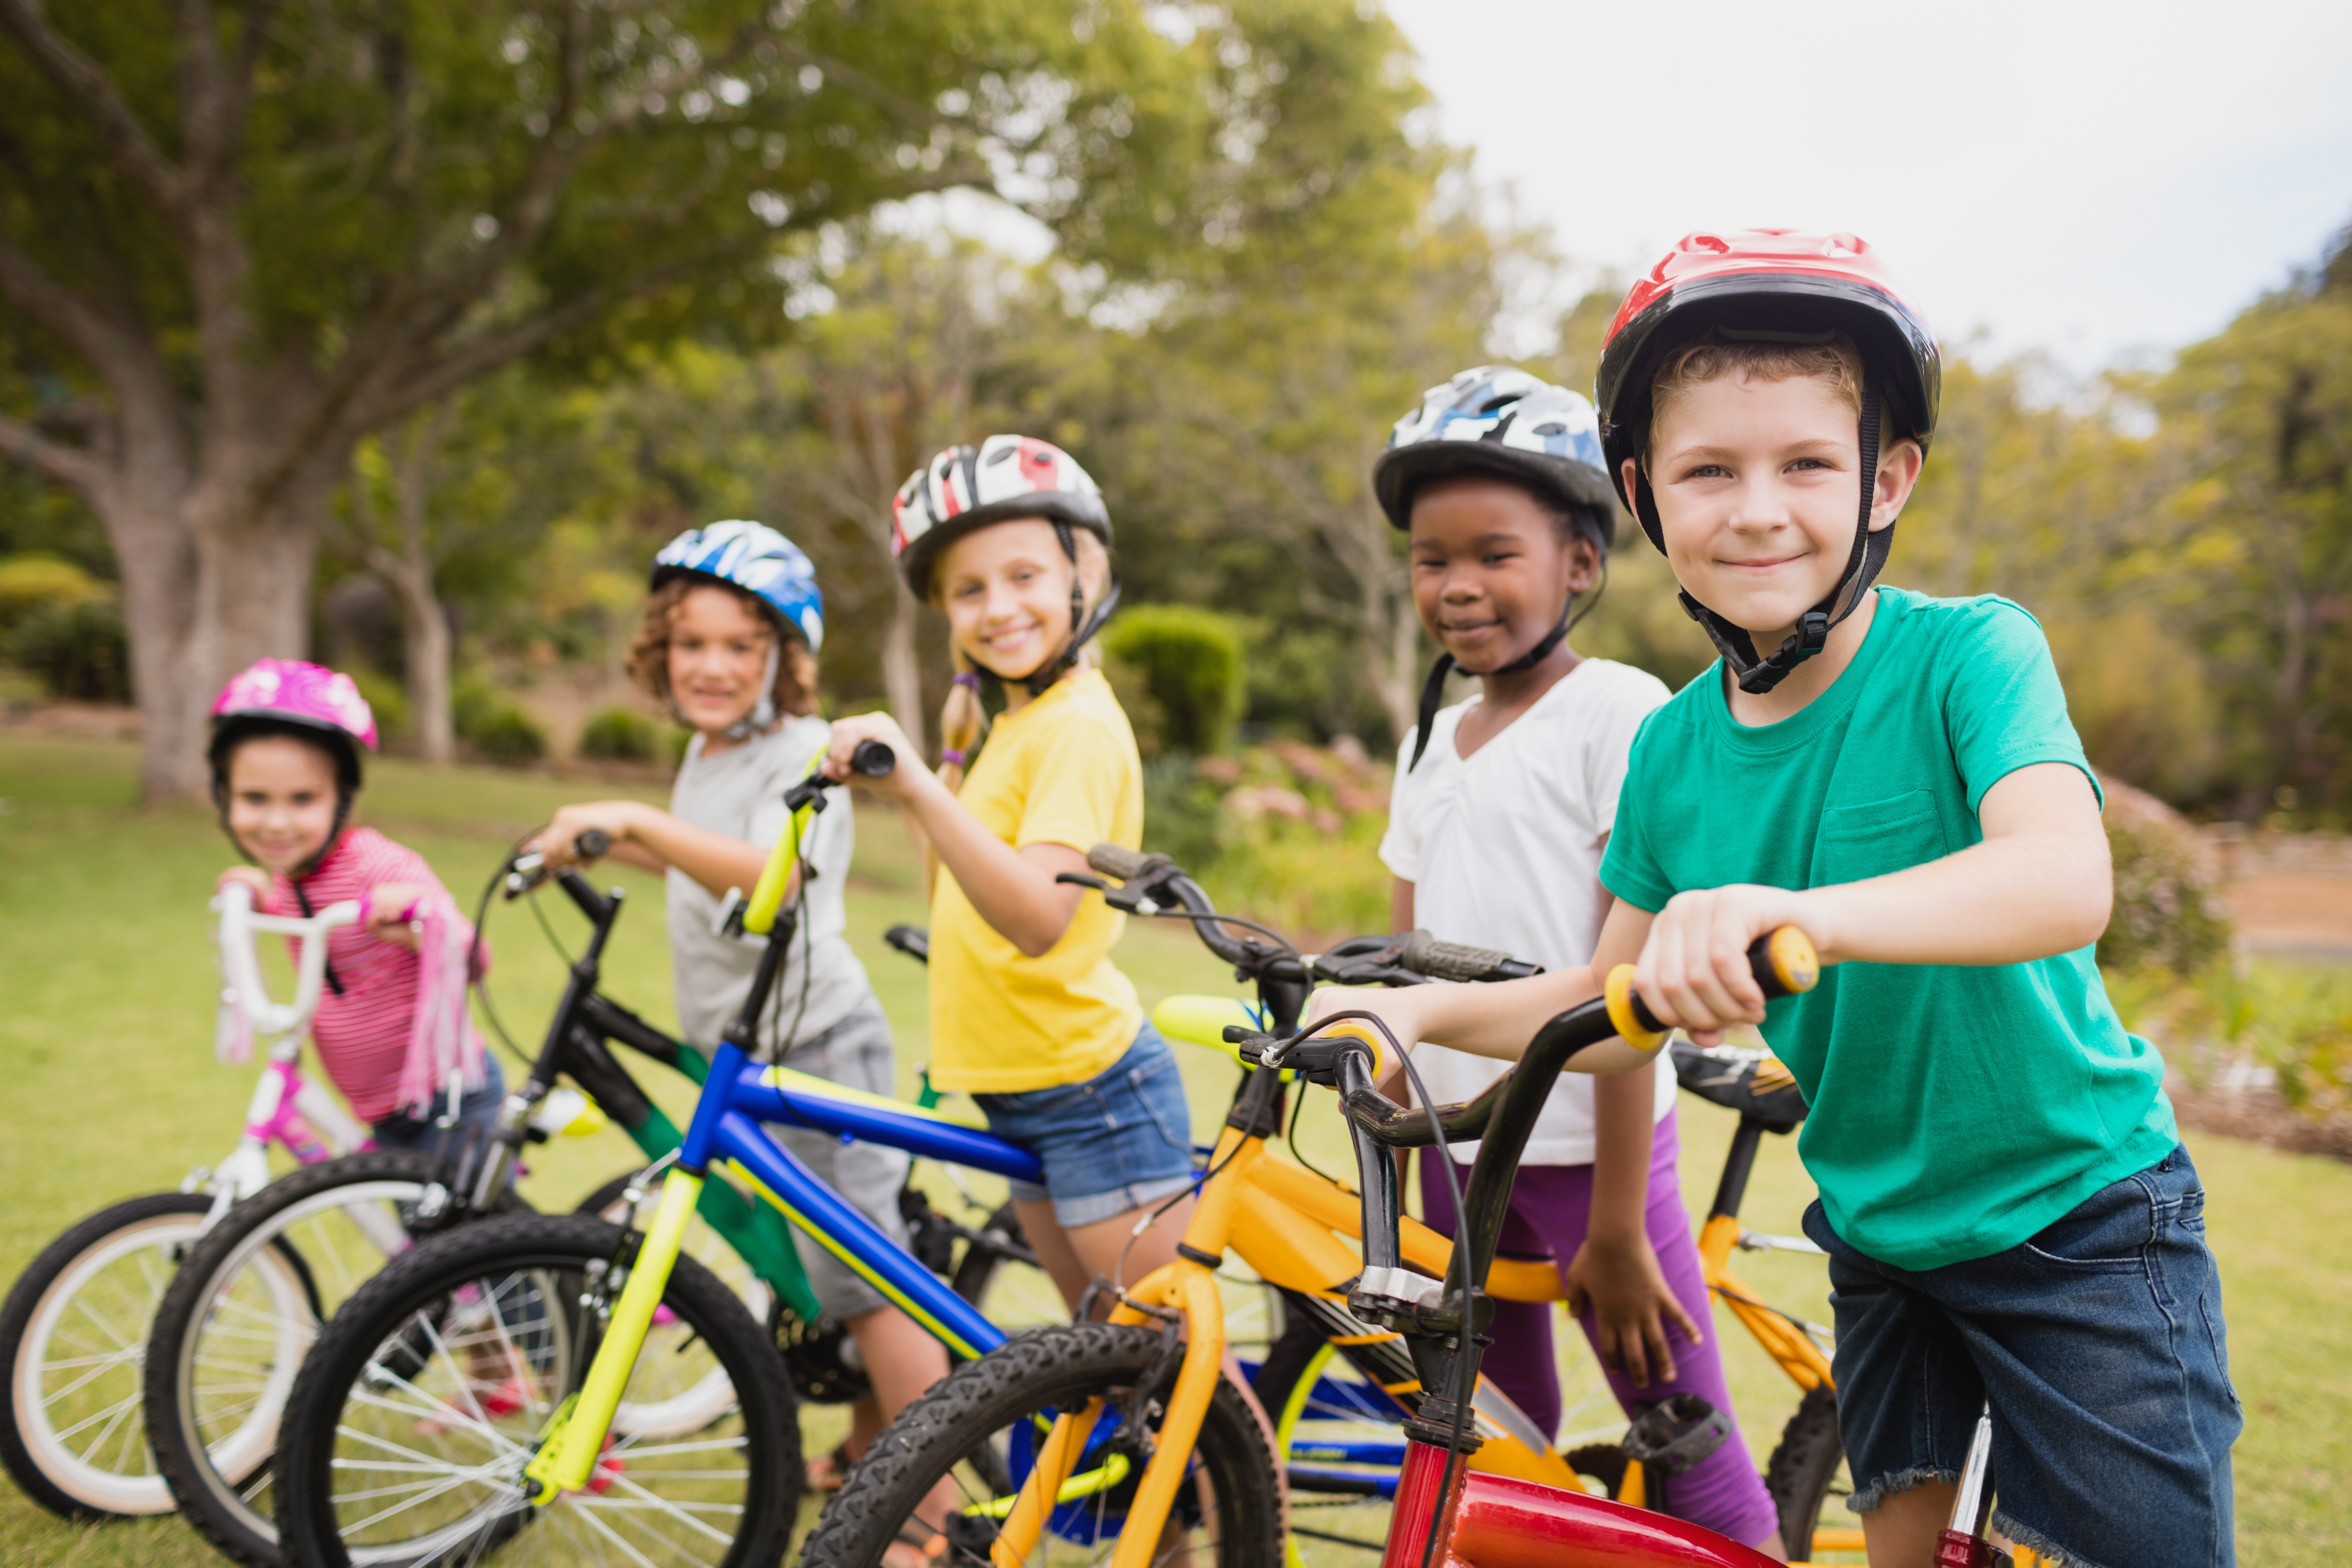 children riding bicycle